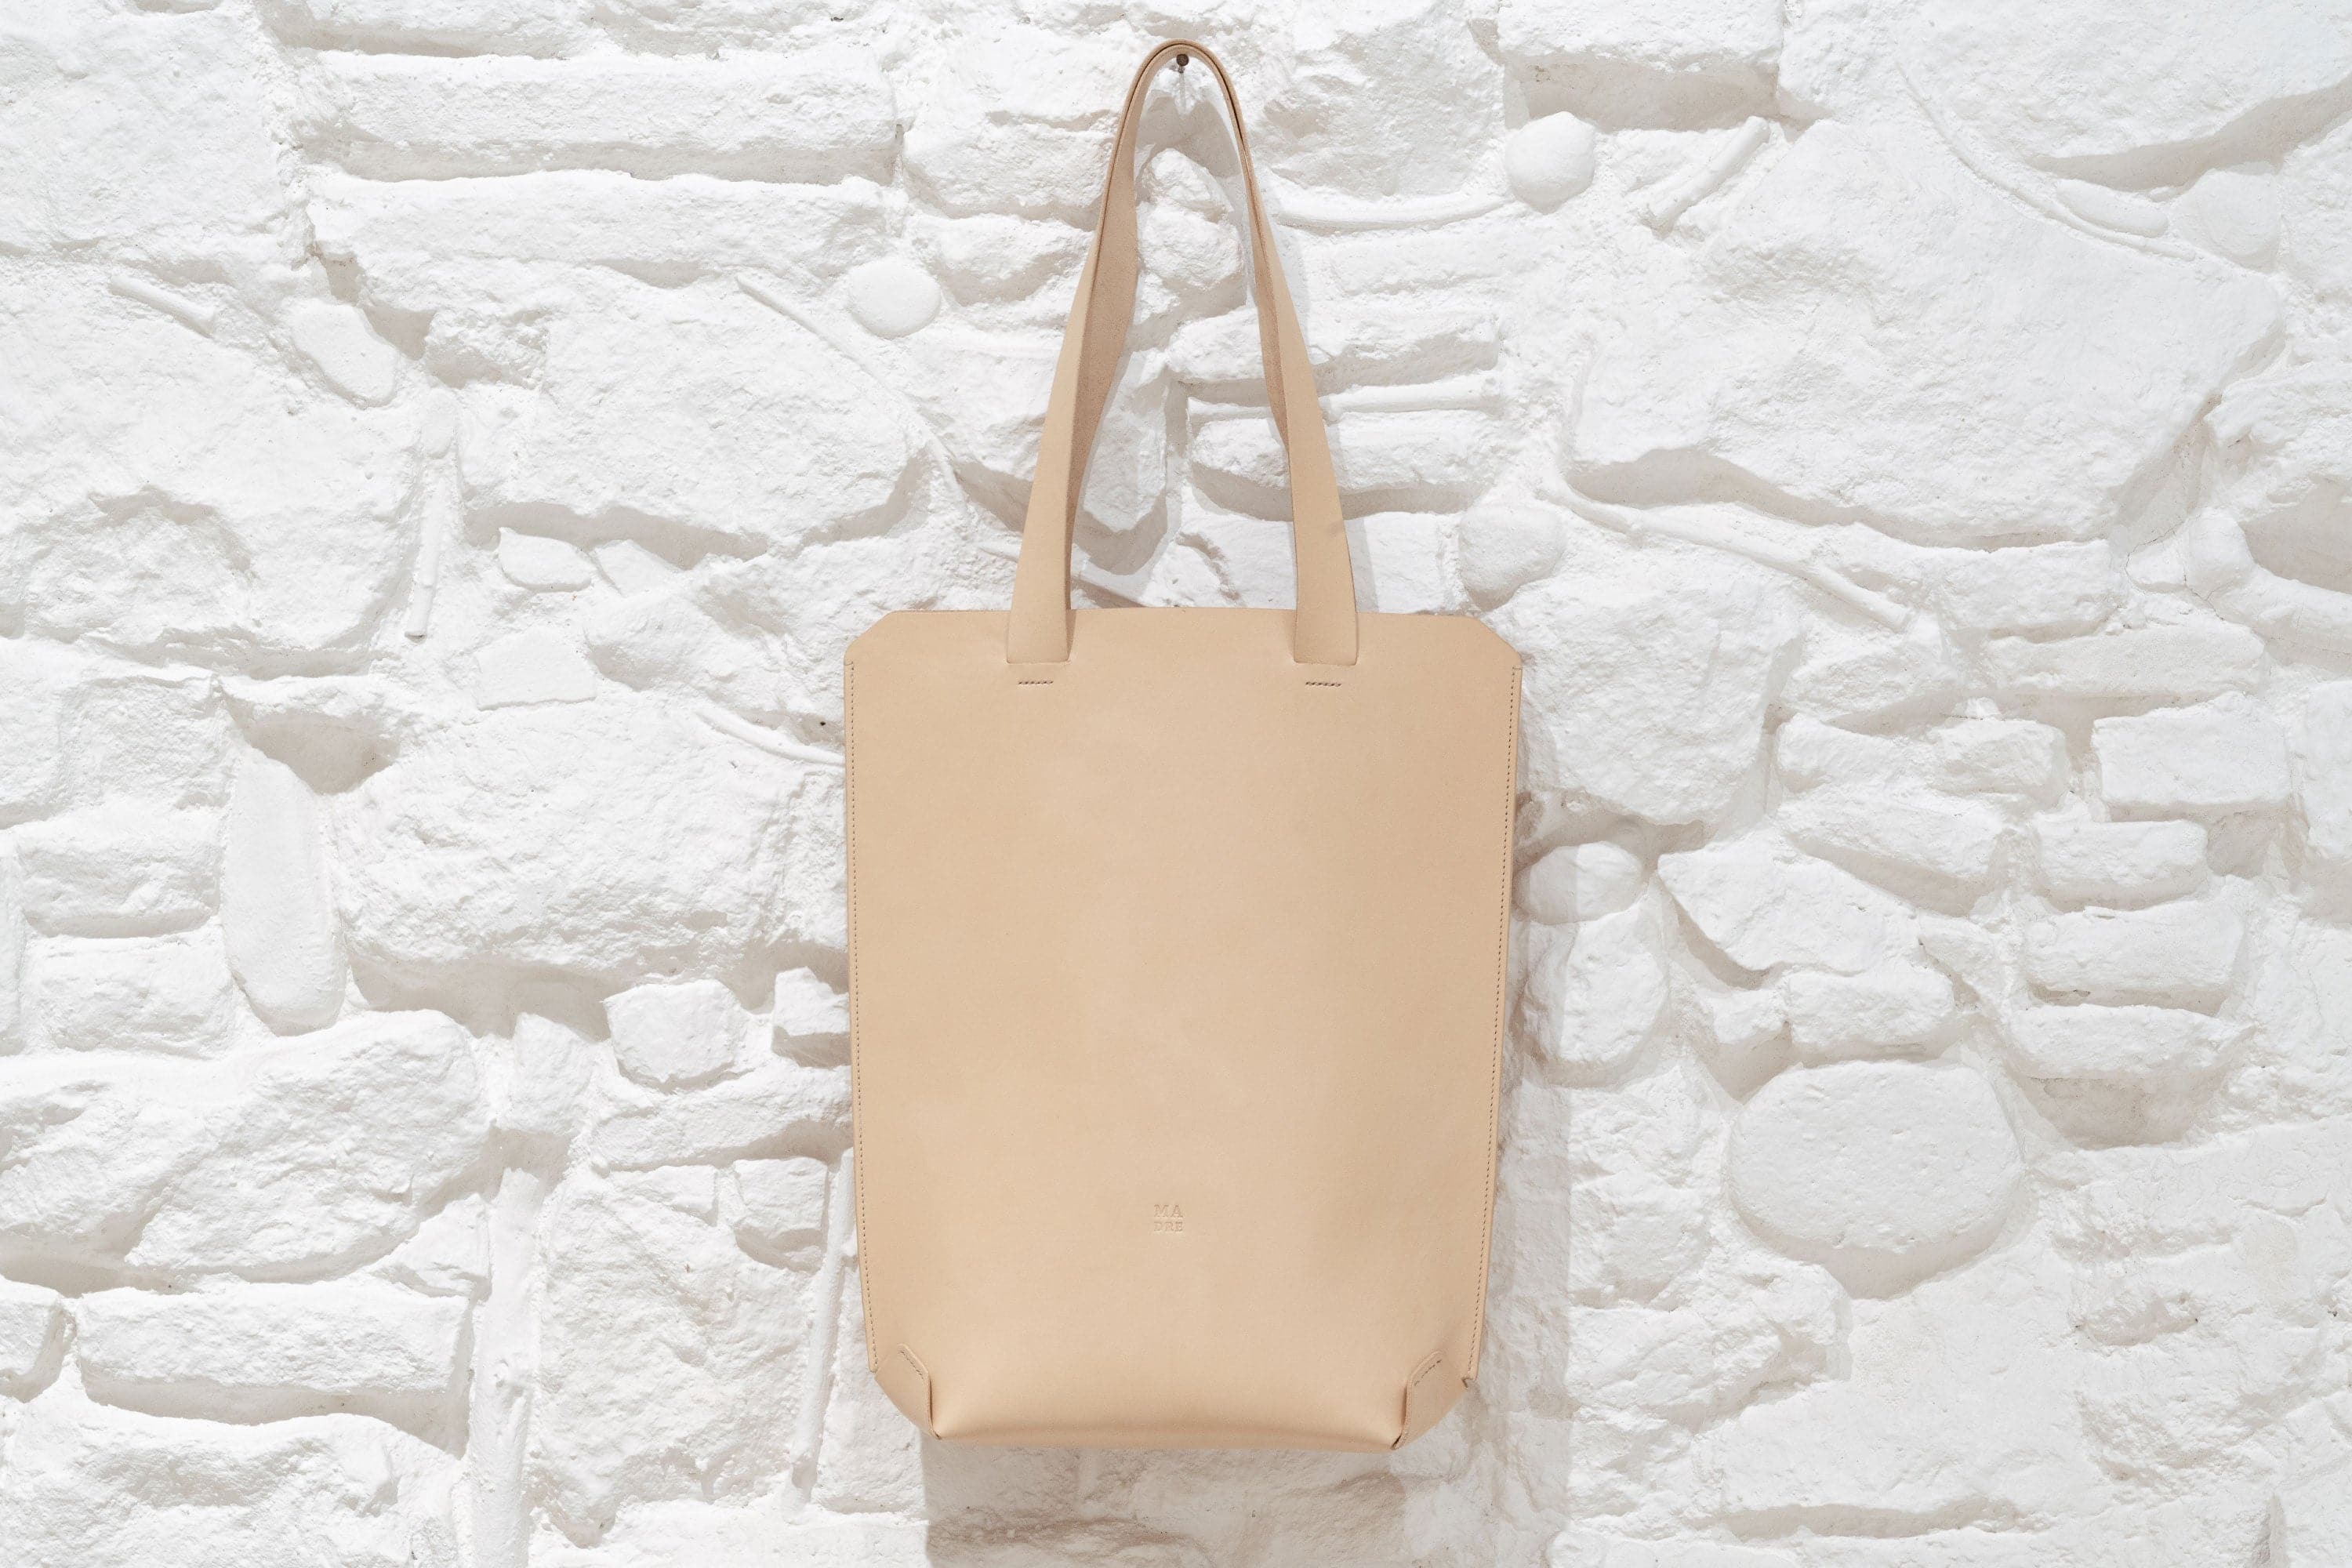 Tote Bag Leather Big Nude Color Vachetta Premium Design By Manuel Dreesmann Atelier Madre Barcelona Spain